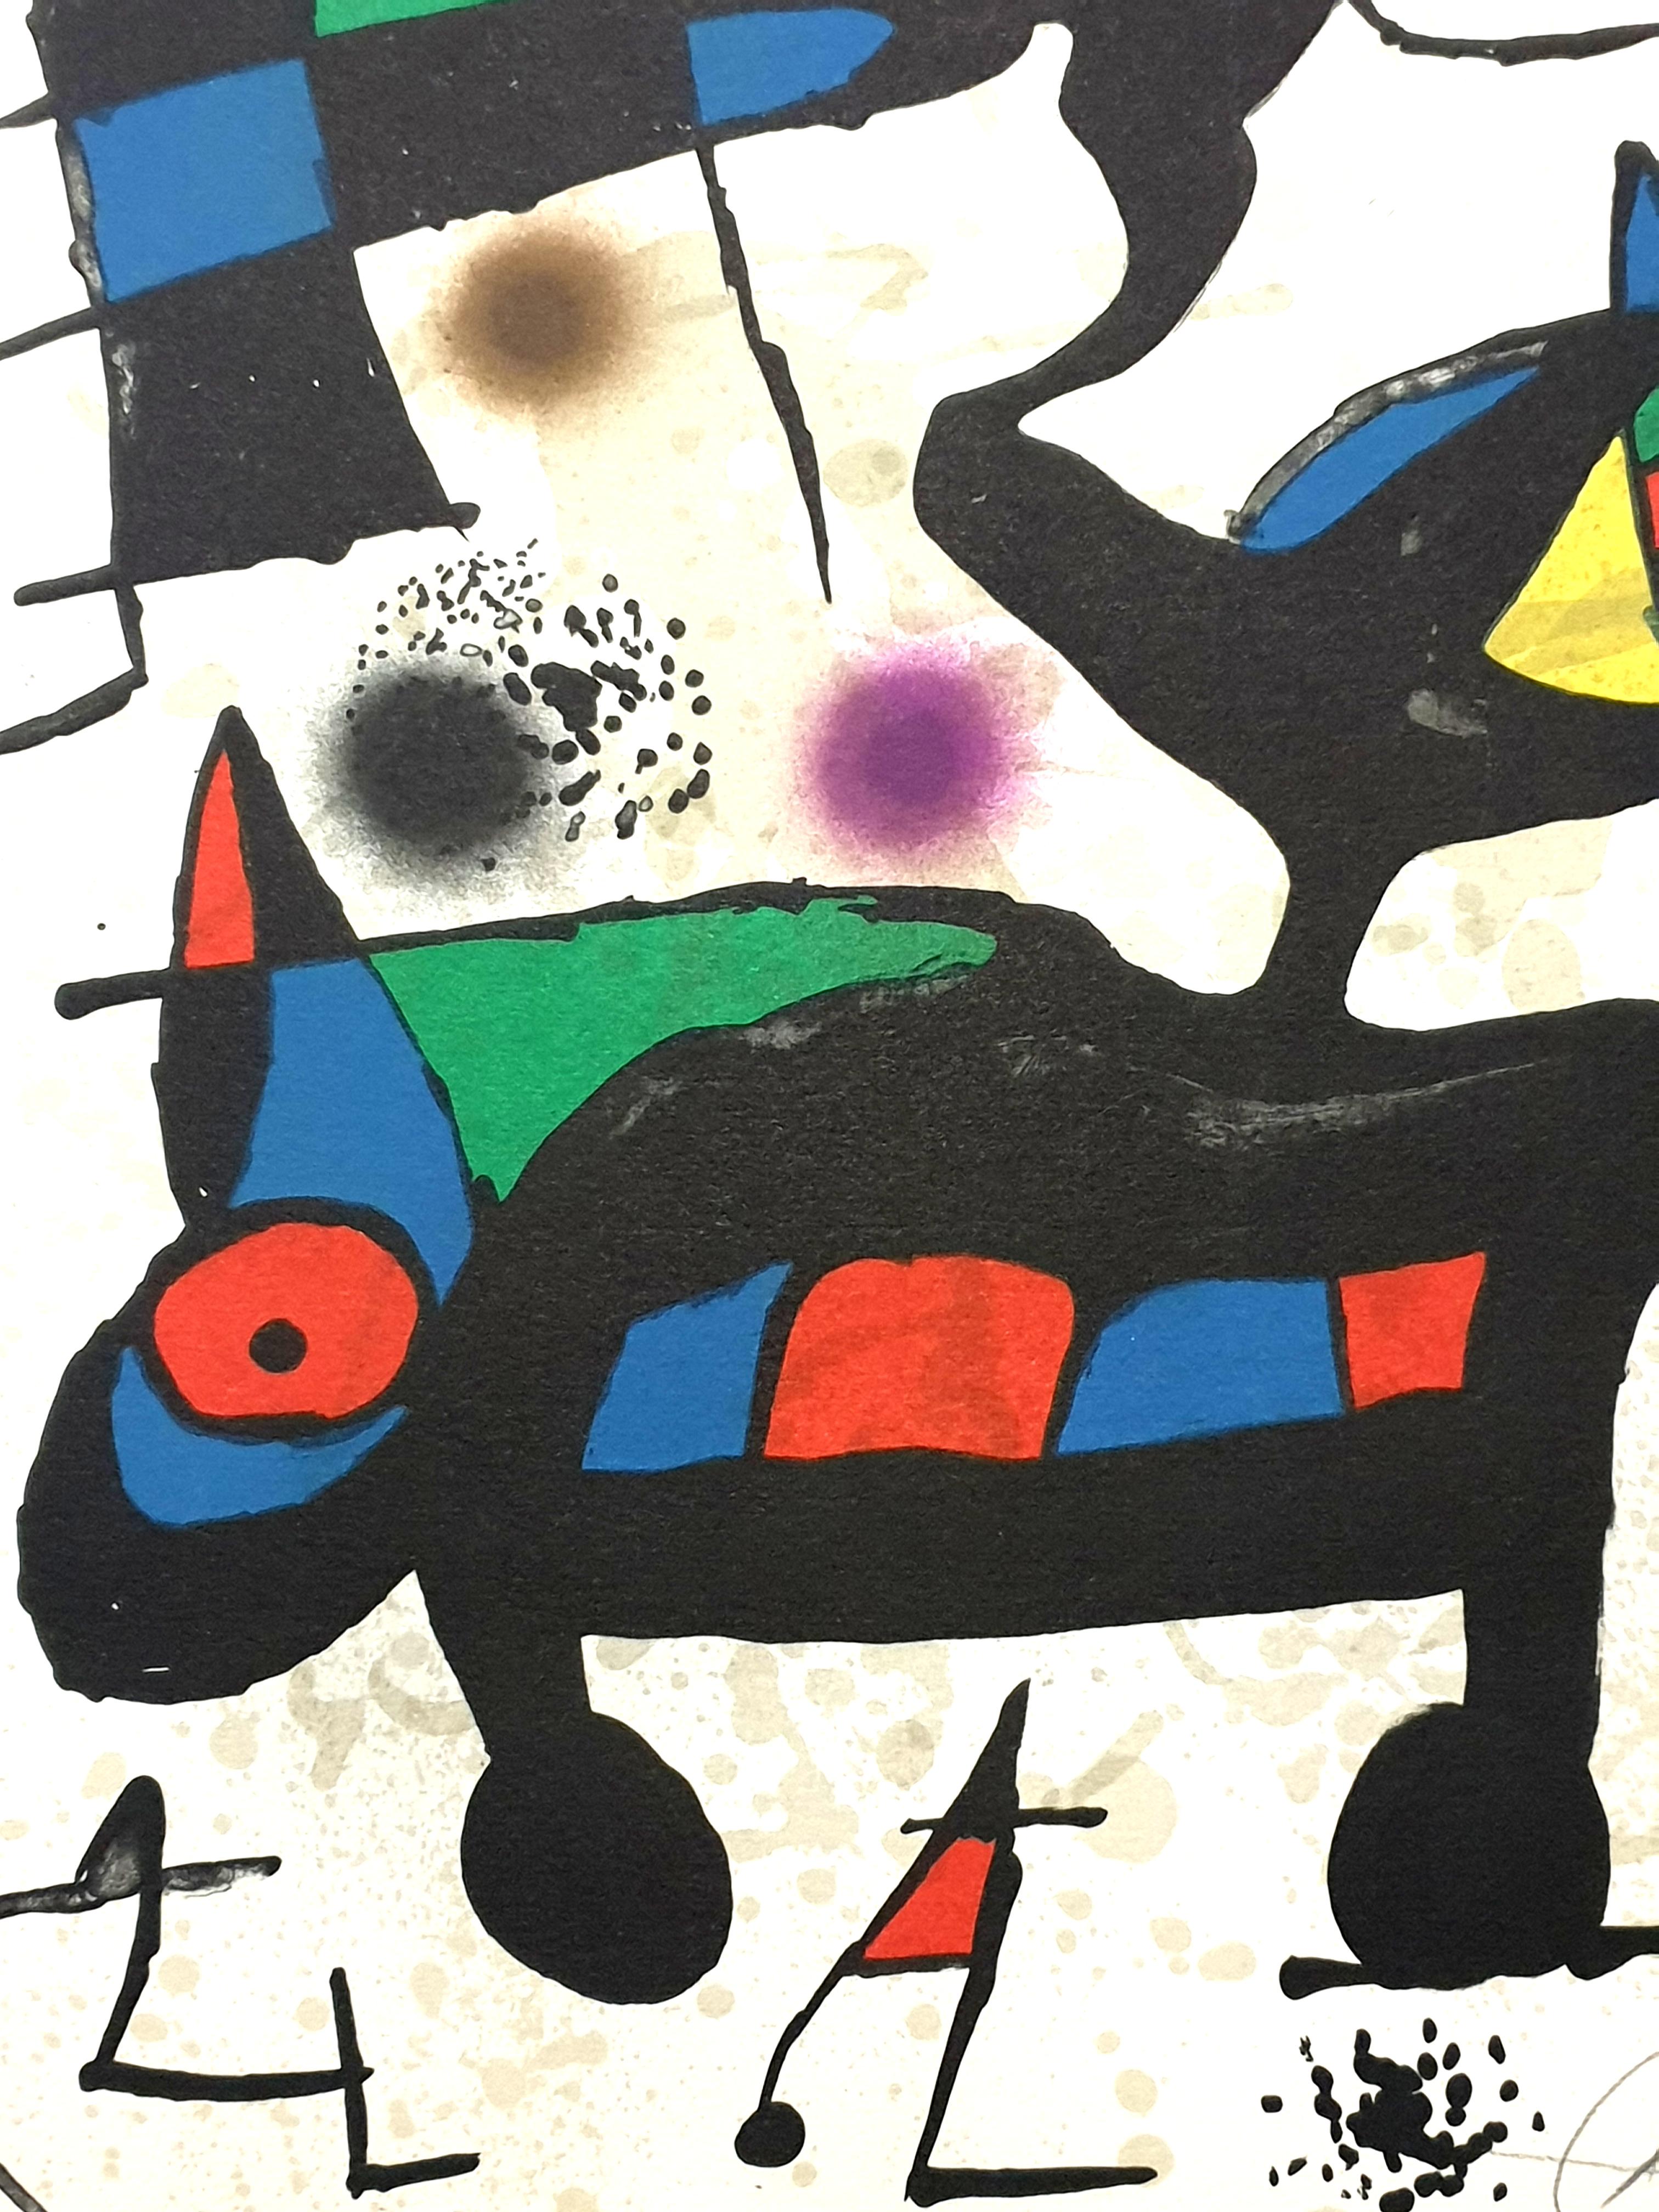 Joan Miro - “Plate I” from “Oda à Joan Miró” - Lithograph - Black Print by Joan Miró